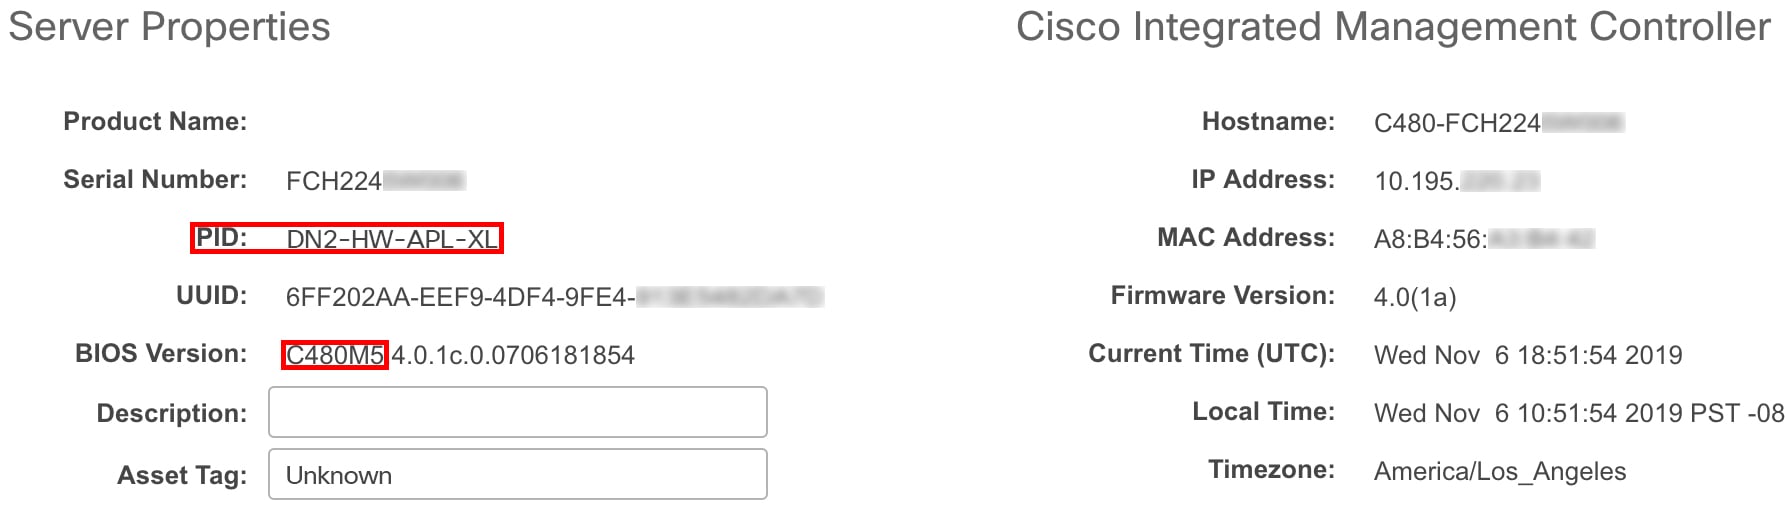 Cisco Integrated Management Controller - Server Properties